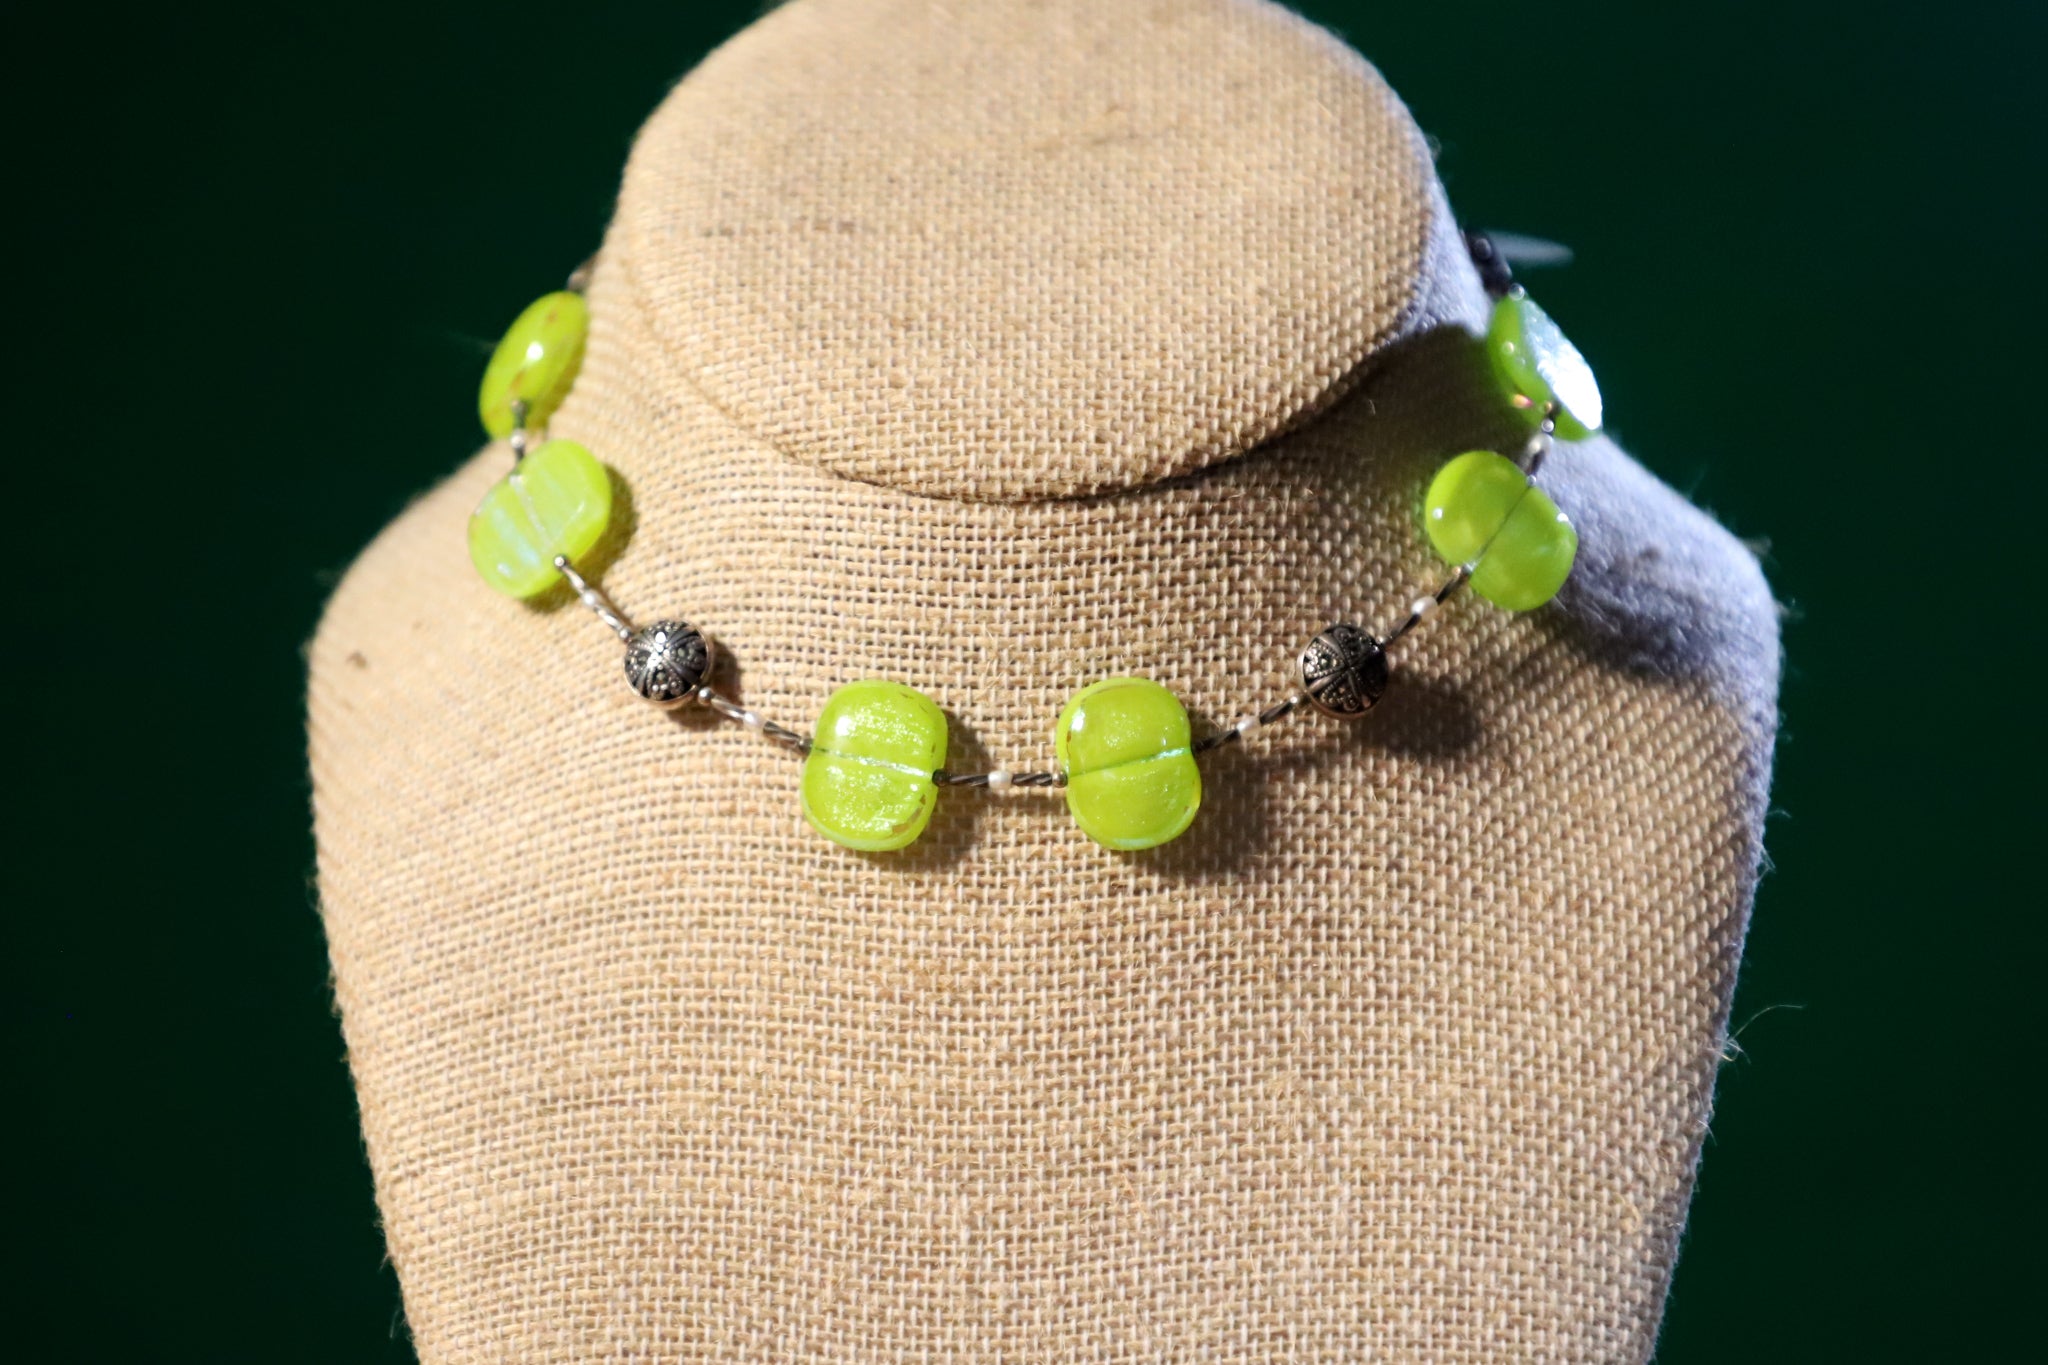 Lime Green Color High Glass Bead Bracelet By Bobbie VanEck